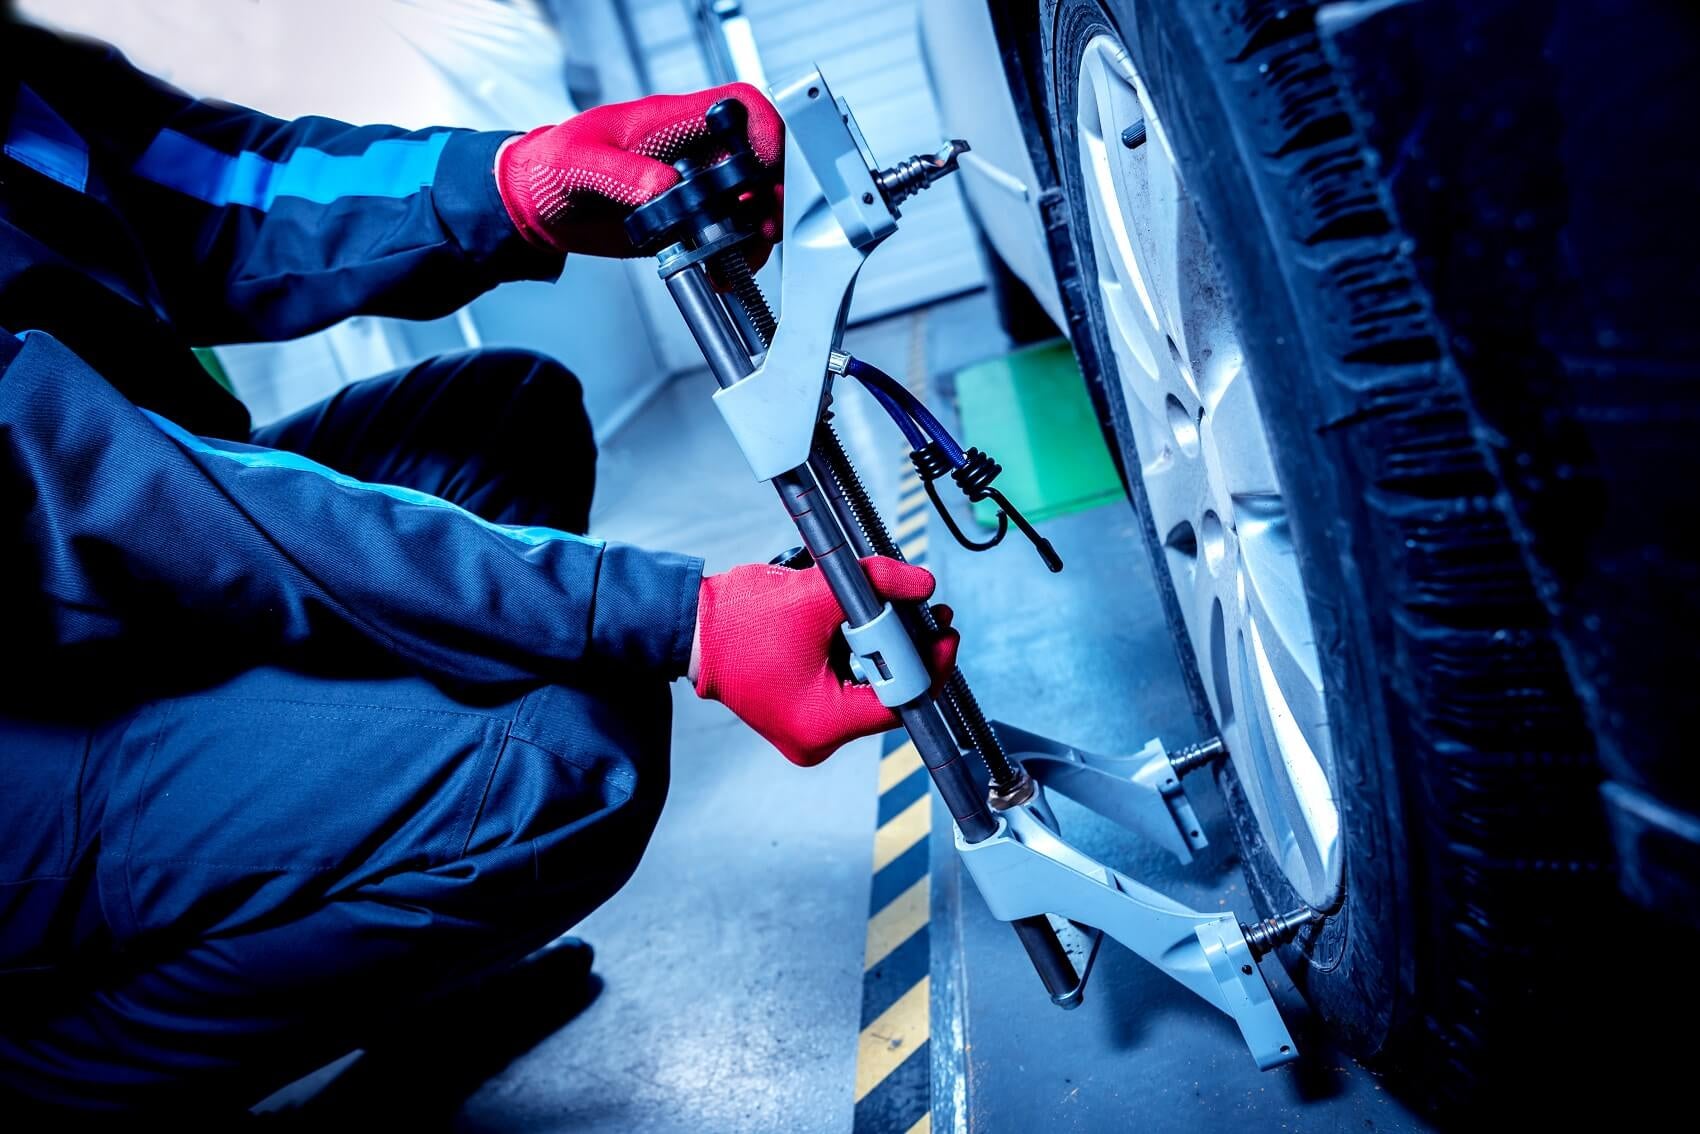 chevy mechanic checks tire pressure at chevy service center